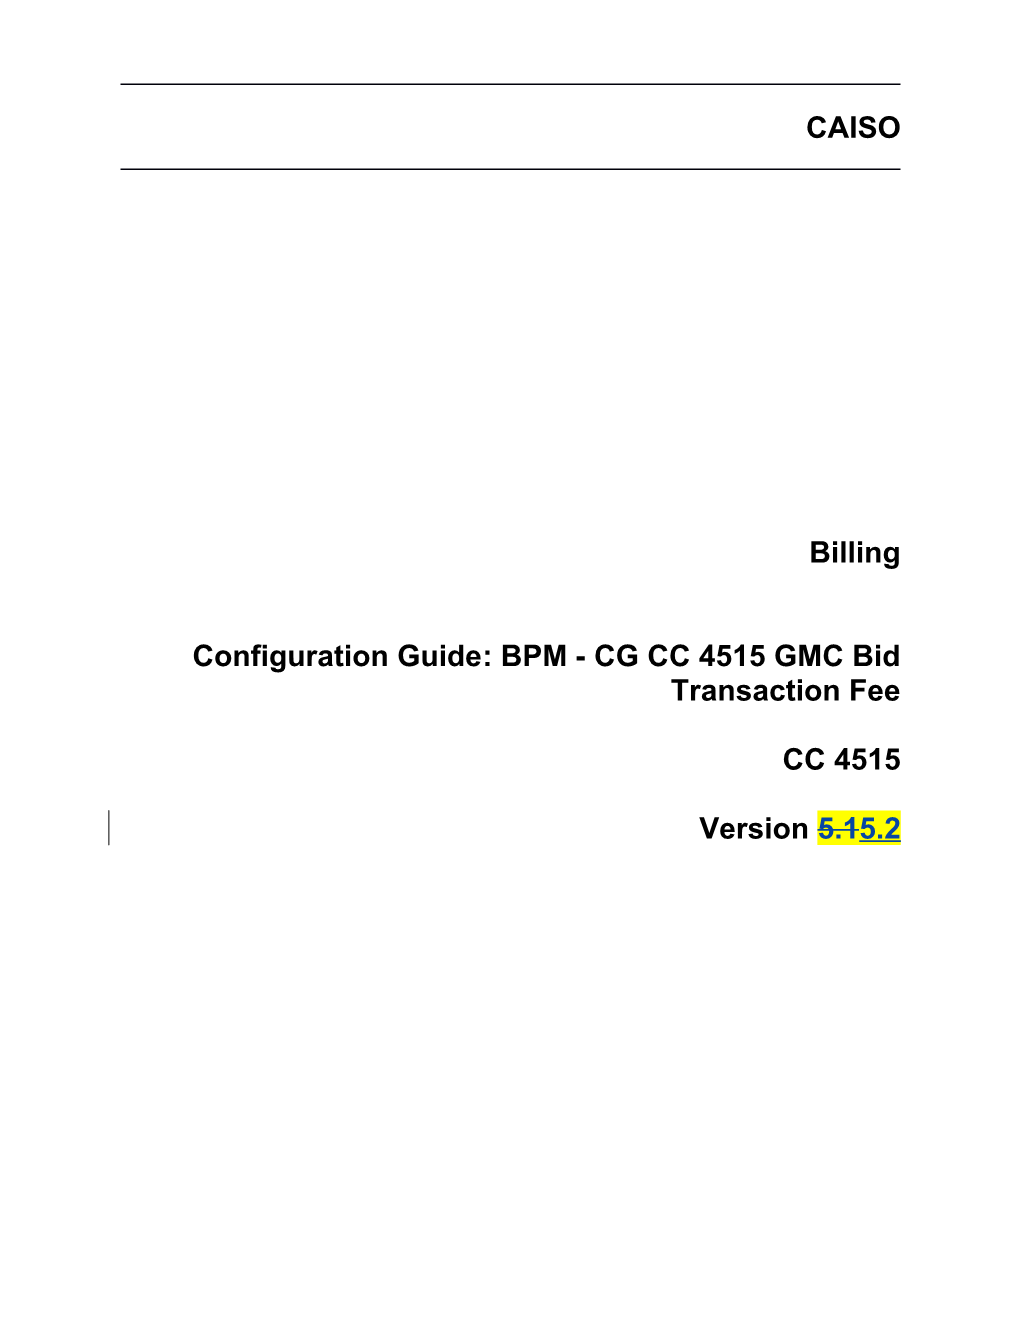 BPM - CG CC 4515 GMC Bid Transaction Fee